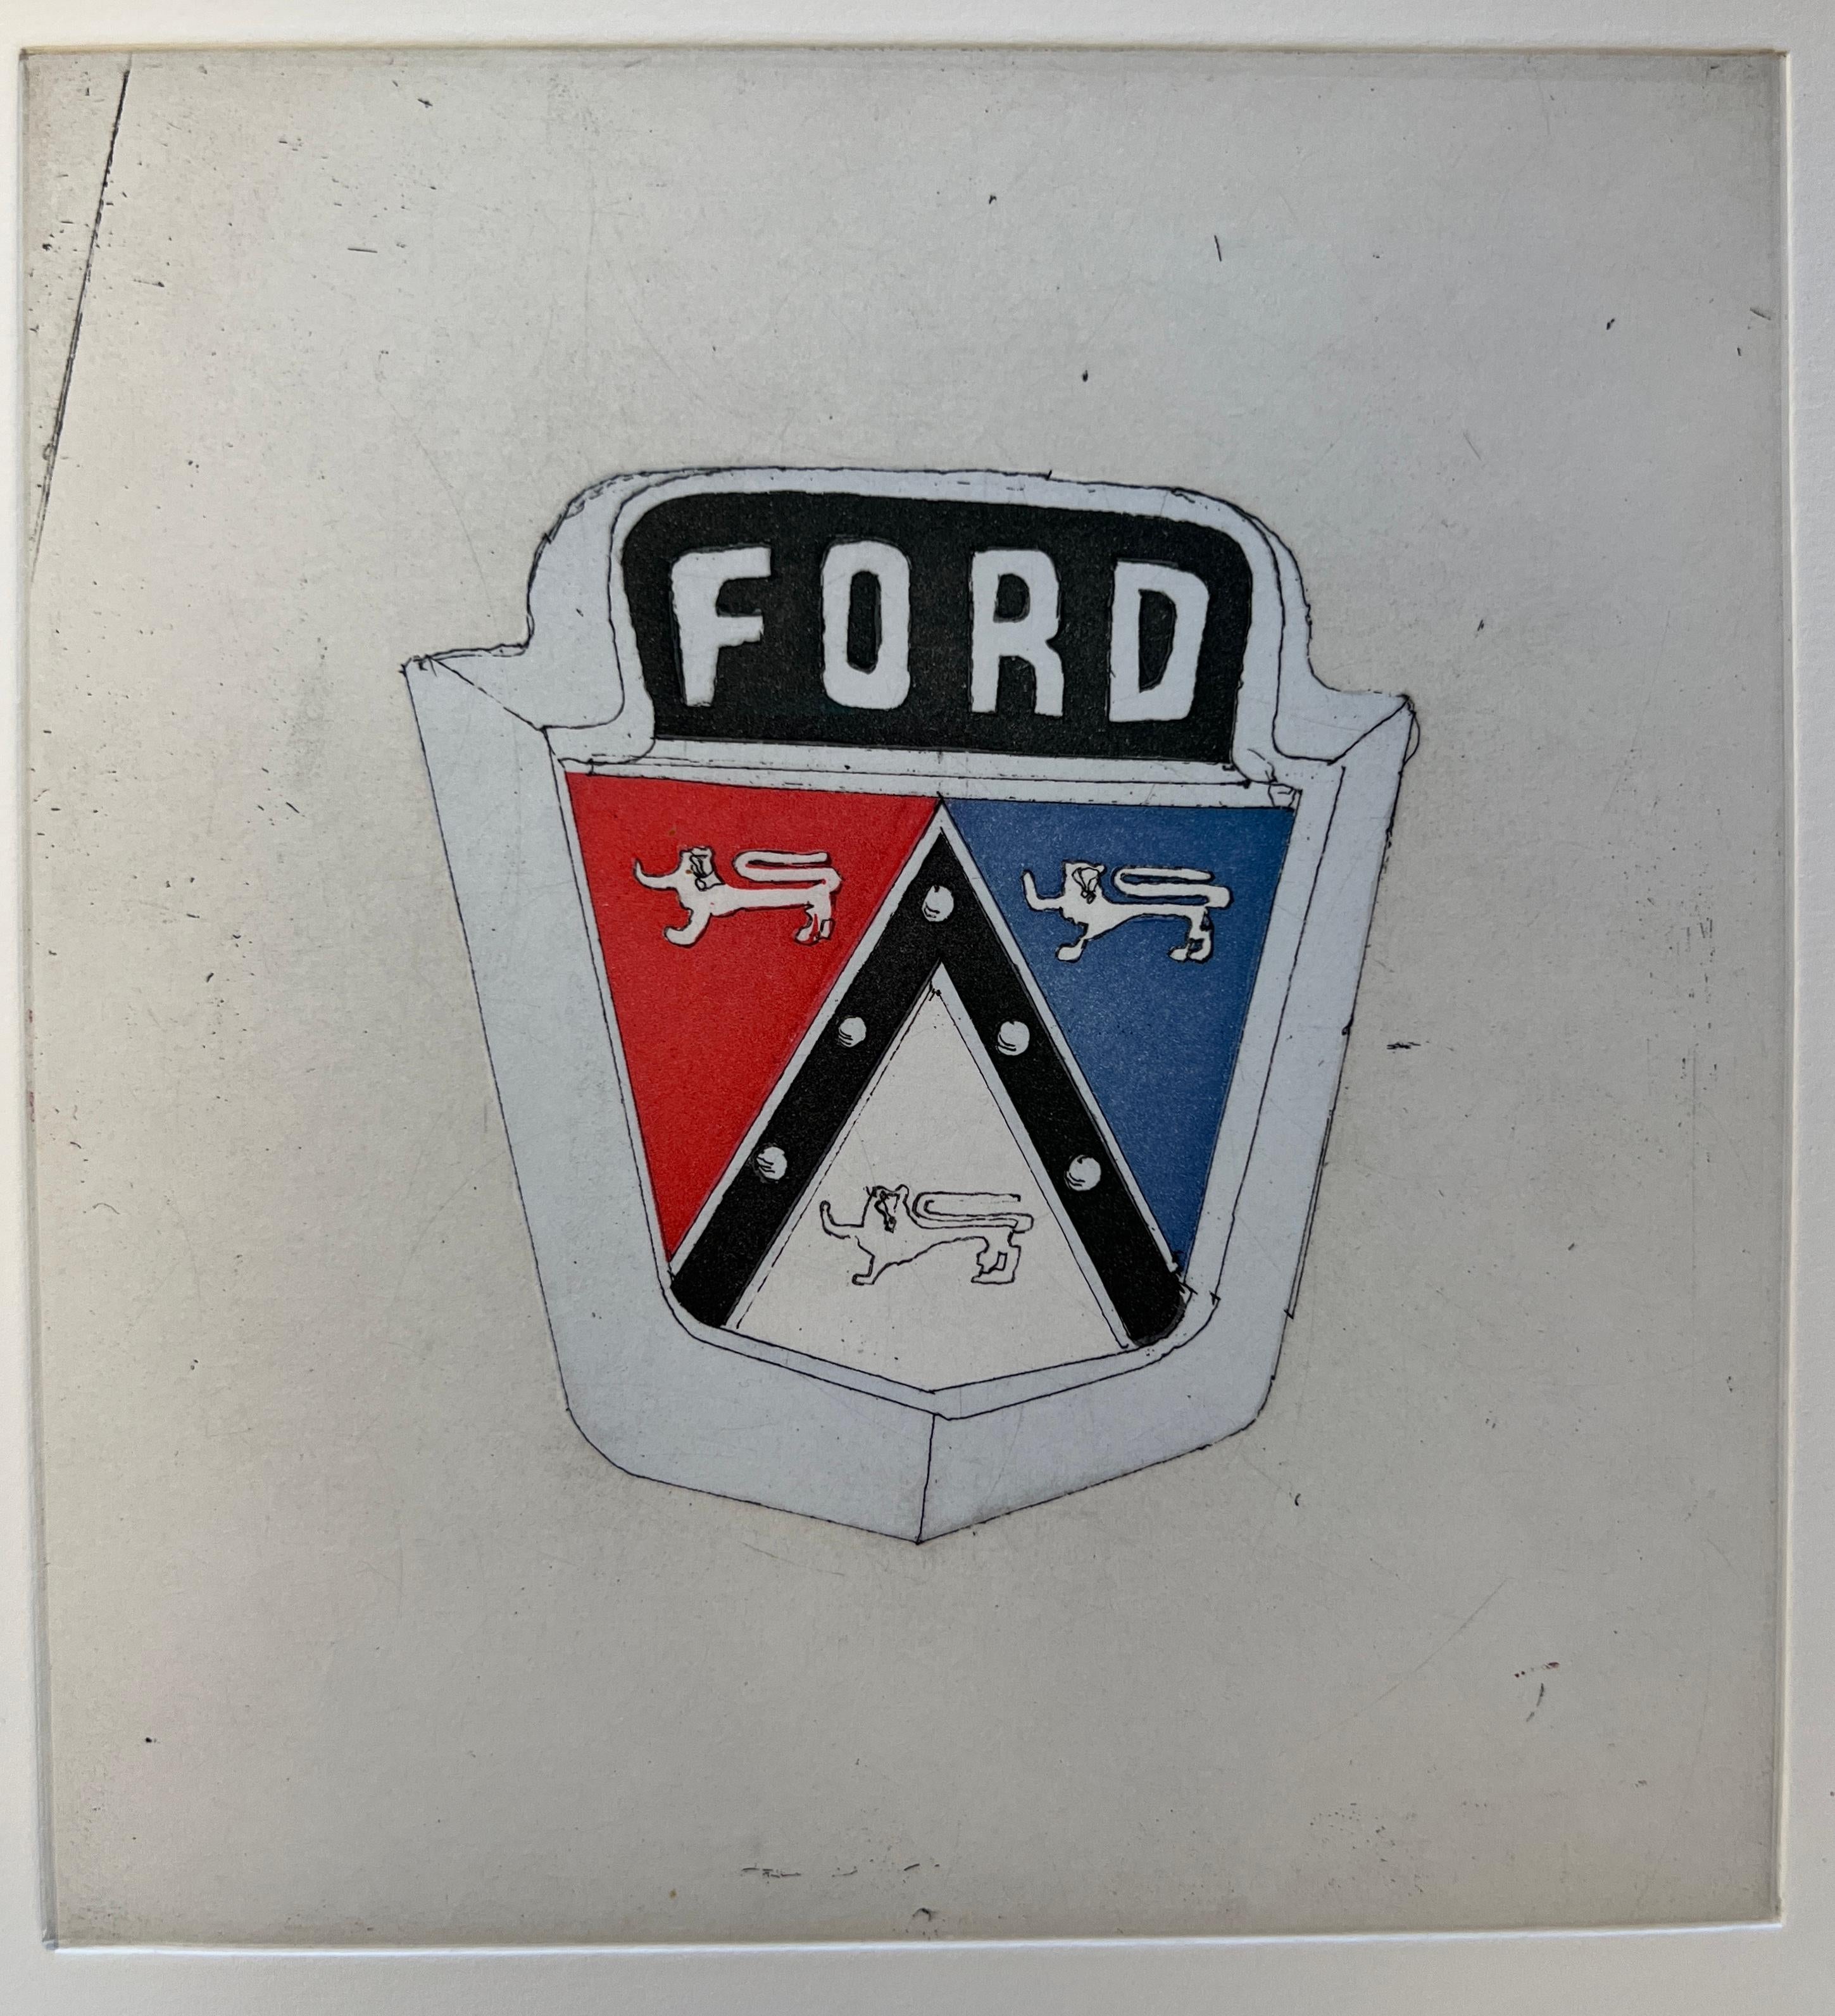 American Ed Ruscha “Ford” Motor City 2009 7/50